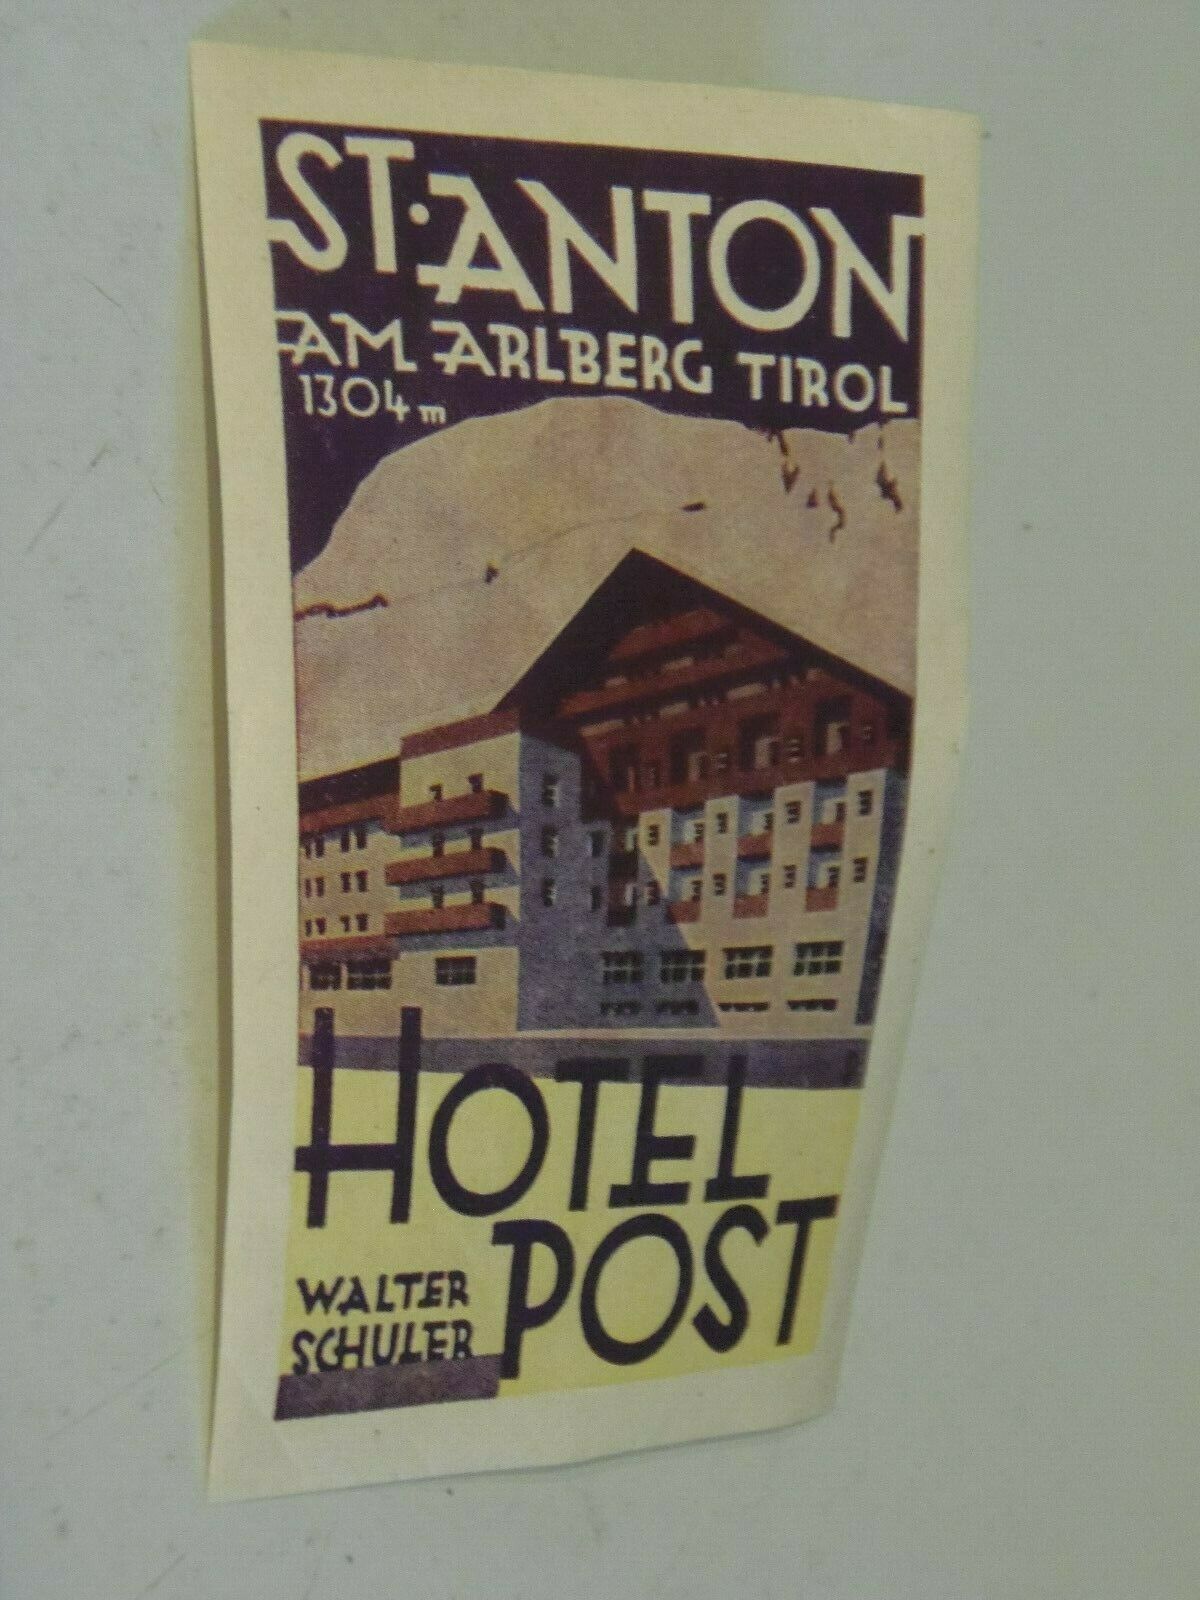 St. Anton AM. Arlberg Tirol Hotel Post Walter Schuler Luggage Label  3/1/21